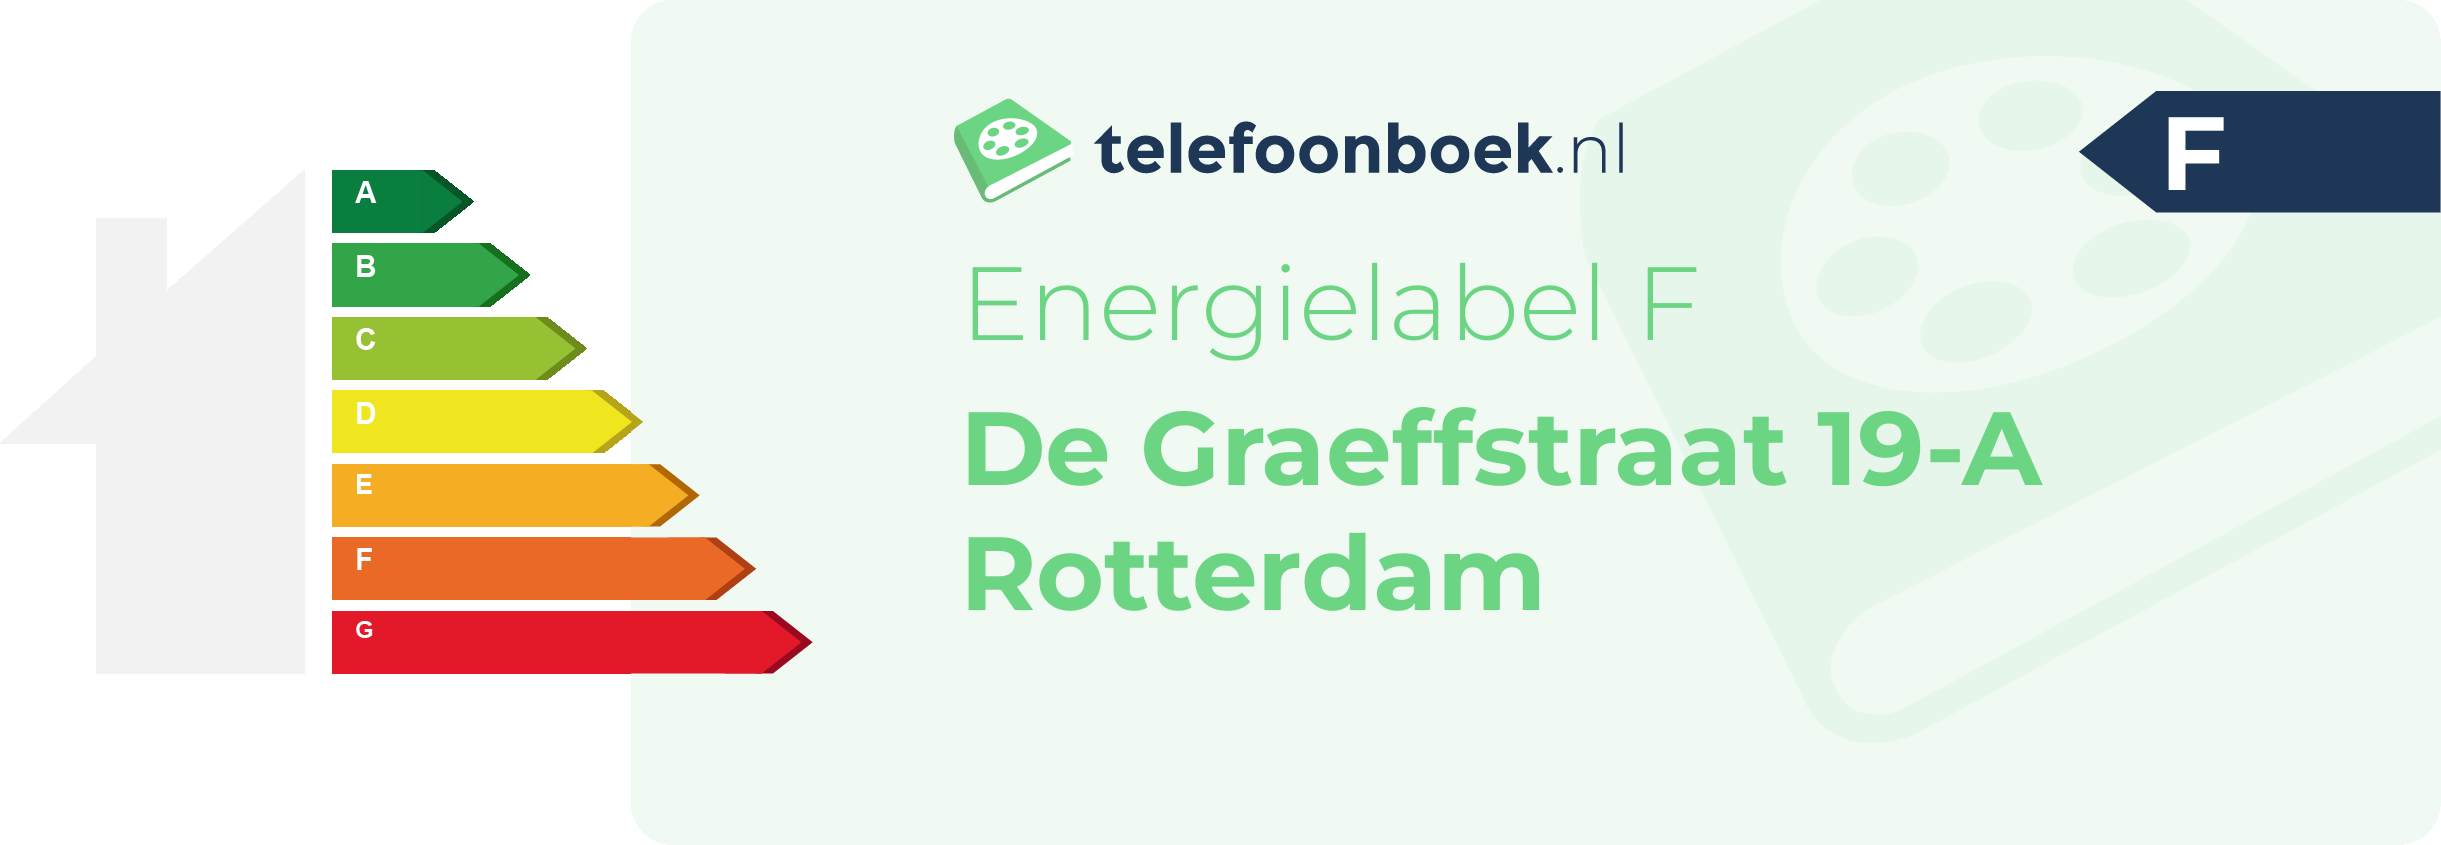 Energielabel De Graeffstraat 19-A Rotterdam